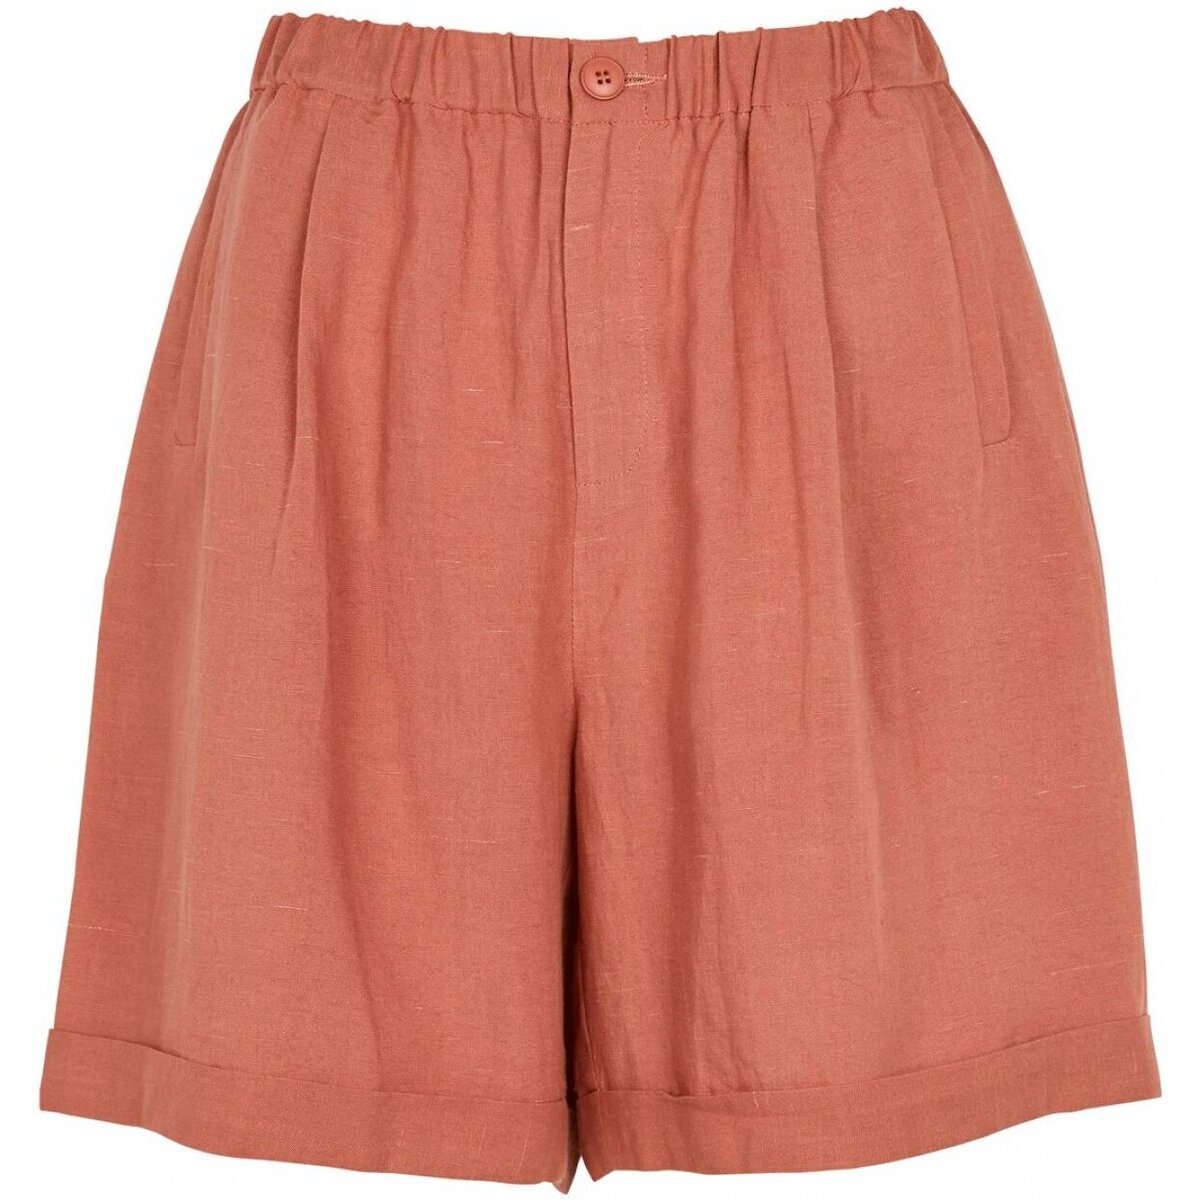 textil Dame Shorts See U Soon 20149126B Orange